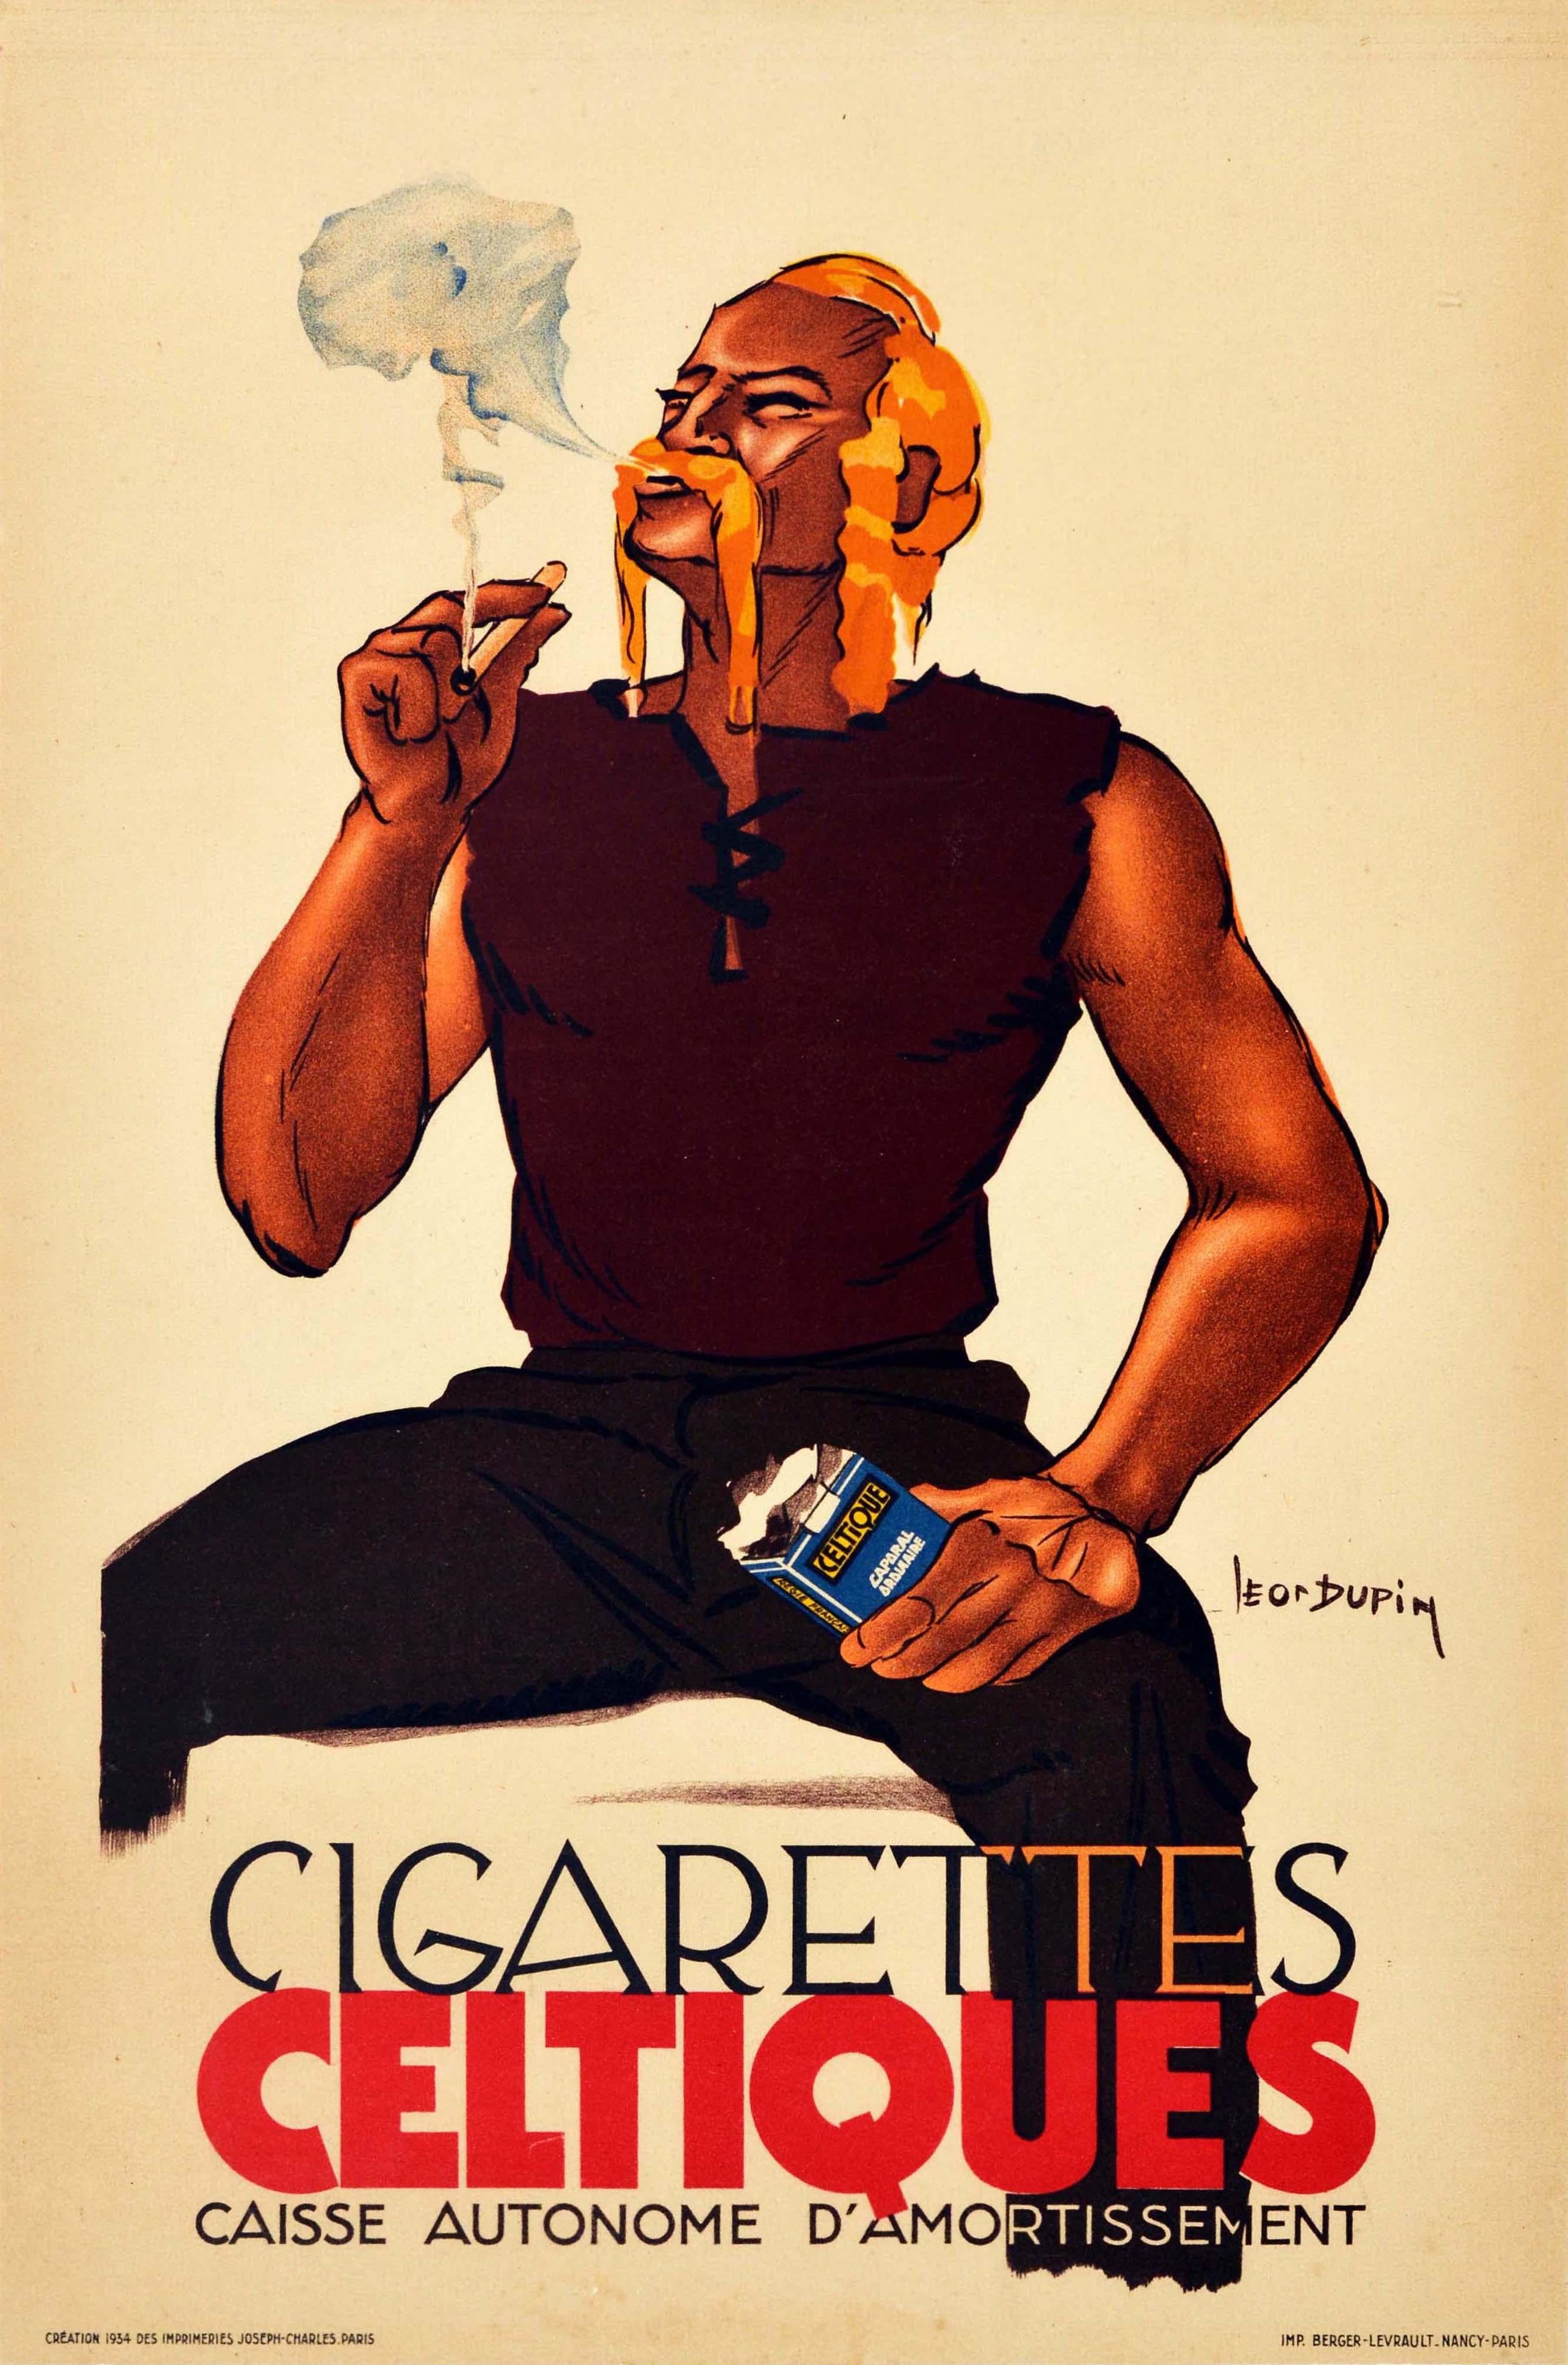 Leon Dupin Print - Original Vintage Poster Cigarettes Celtiques French Tobacco Smoking Man Artwork